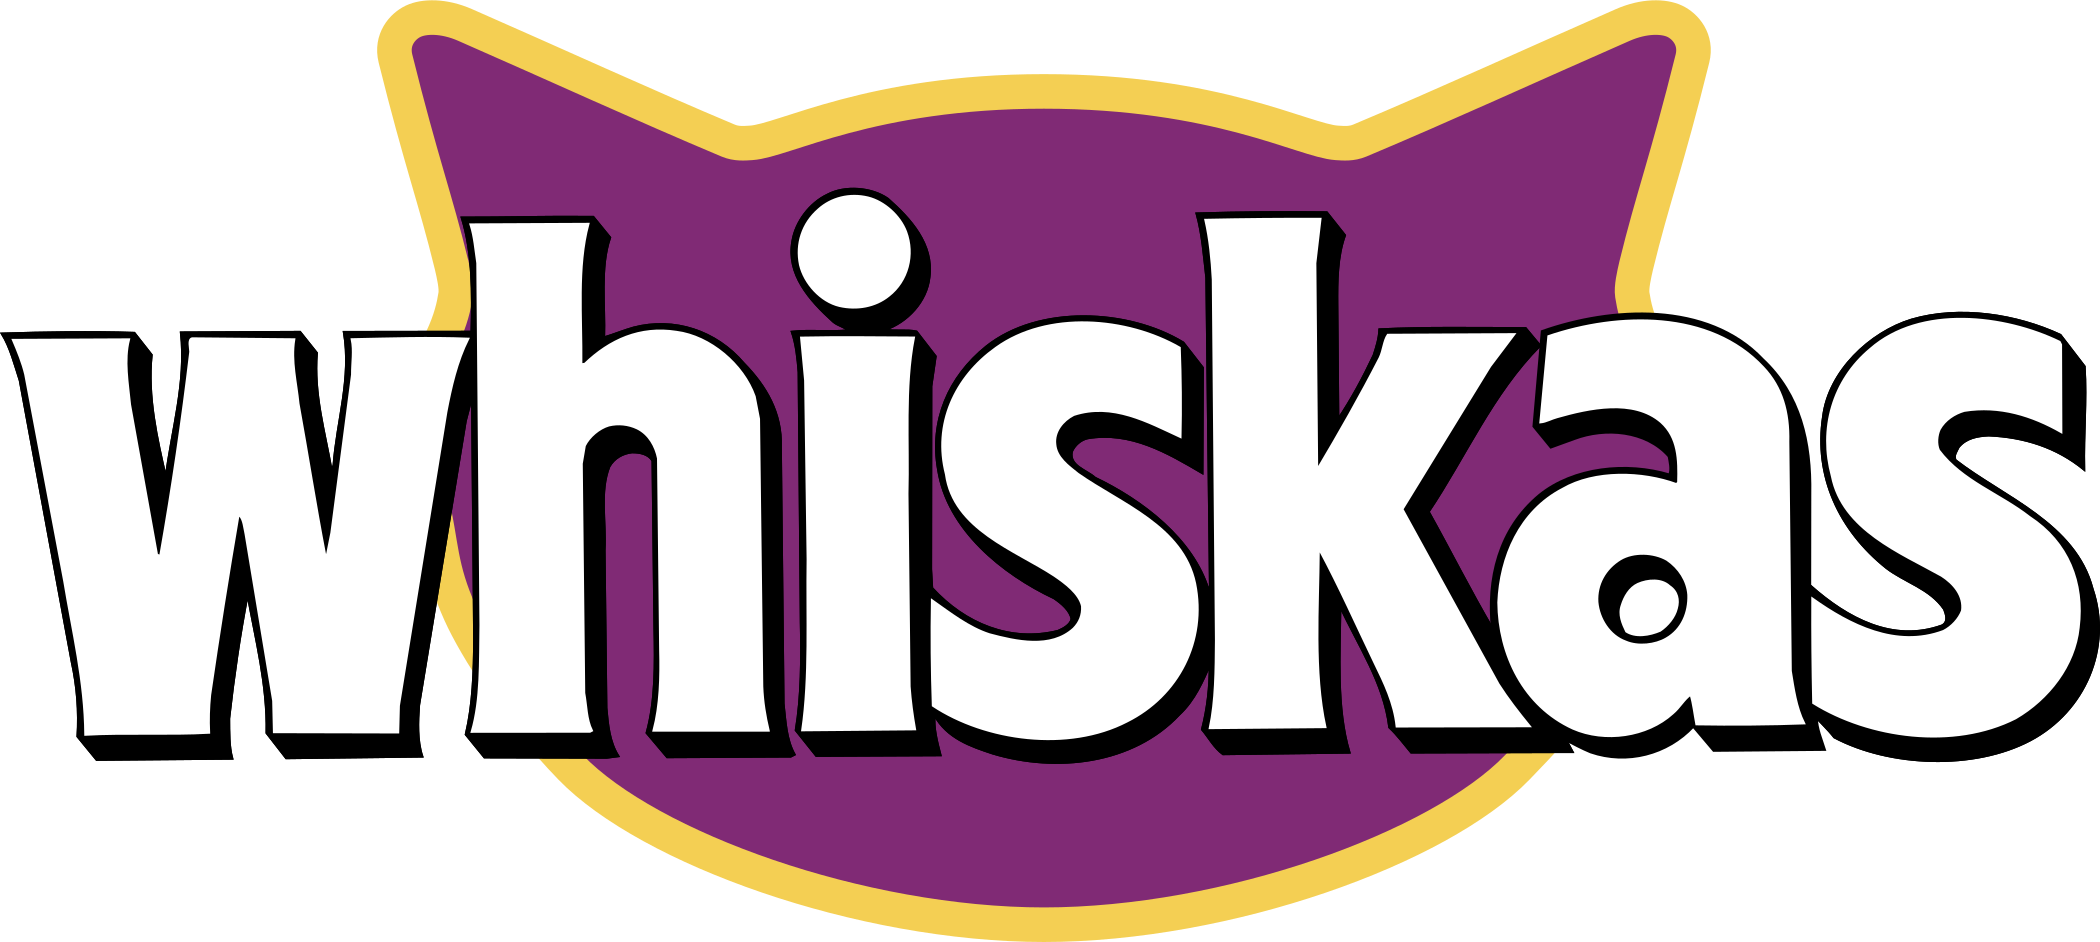 Whiskas Logo - PNG e Vetor - Download de Logo